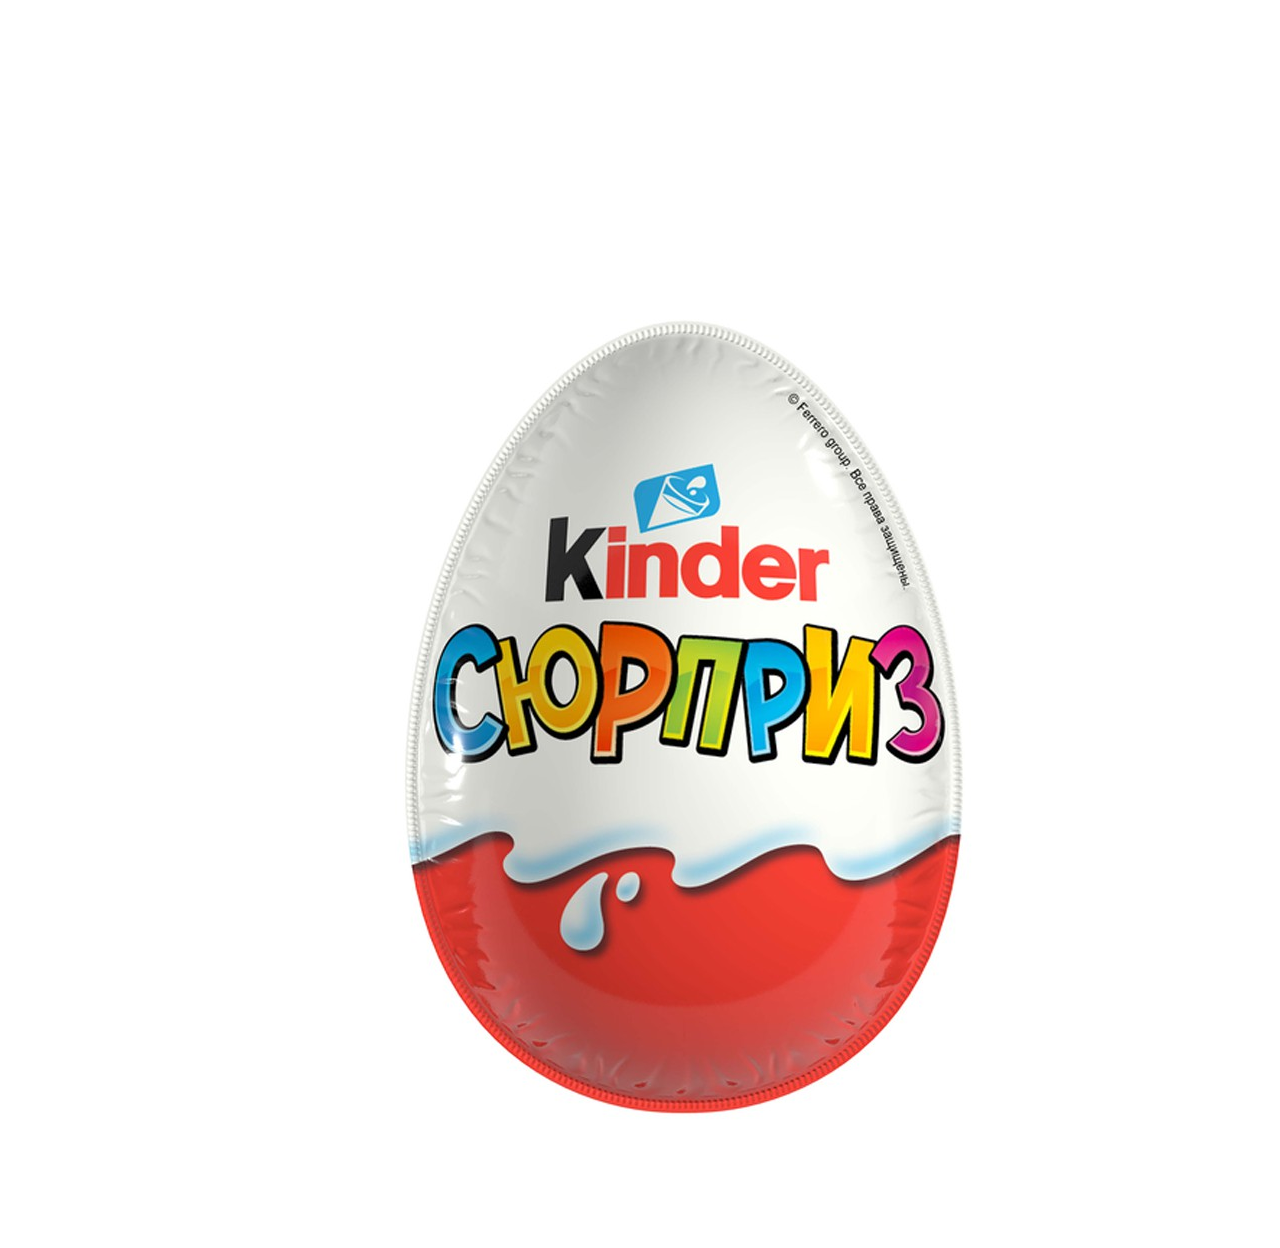 Яички киндер. Шоколадное яйцо kinder "Киндер-сюрприз", 20 г. Киндер сюрприз 20г шоколадное яйцо.